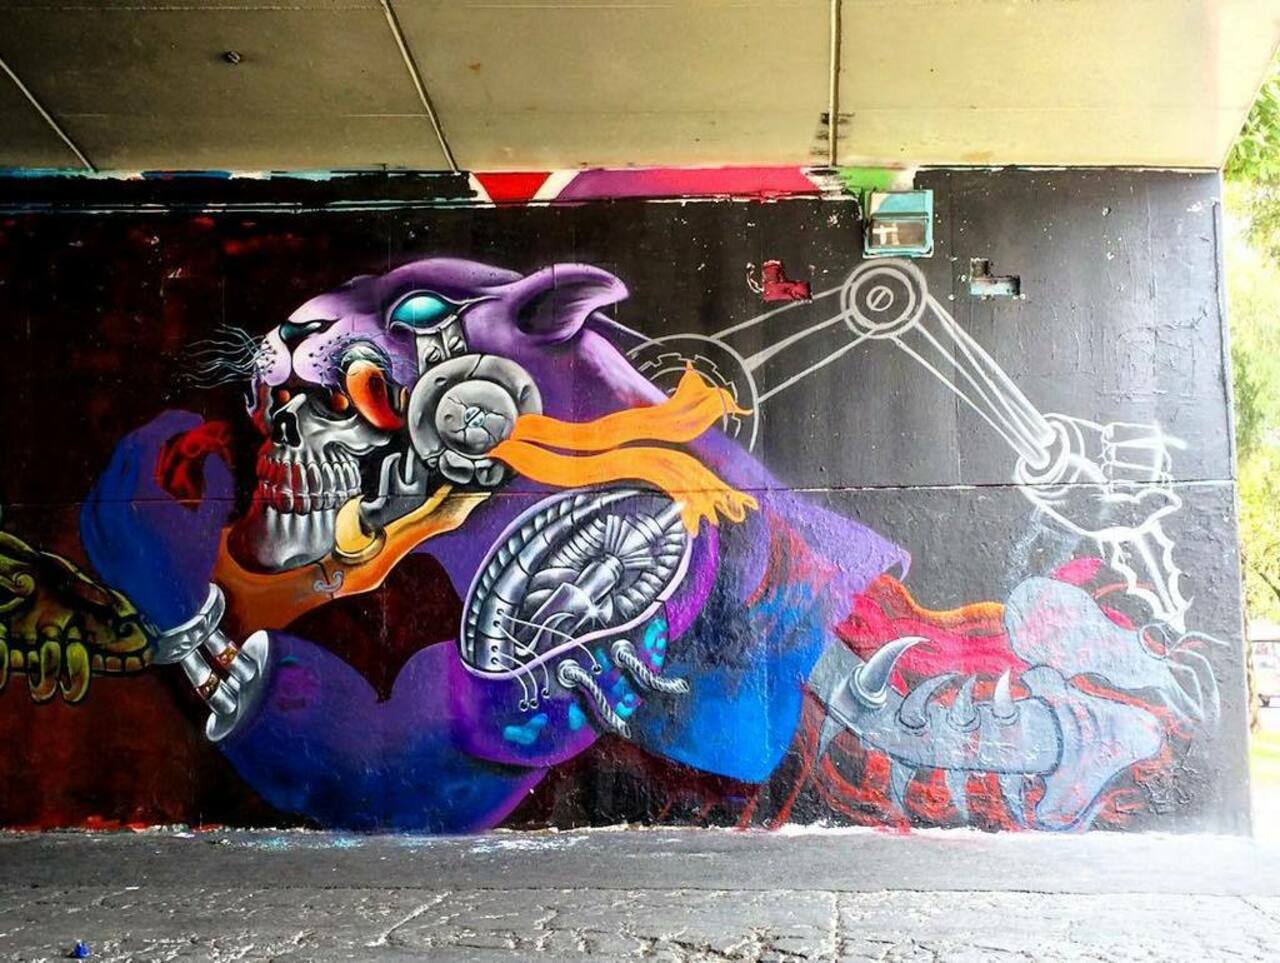 RT @StArtEverywhere: #streetart #arteurbano #urbanart #urban #art #mexico #cdmx #mexicodf #mural #graffiti #streetartmexico #urbanwalls … http://t.co/13oAd28hQe